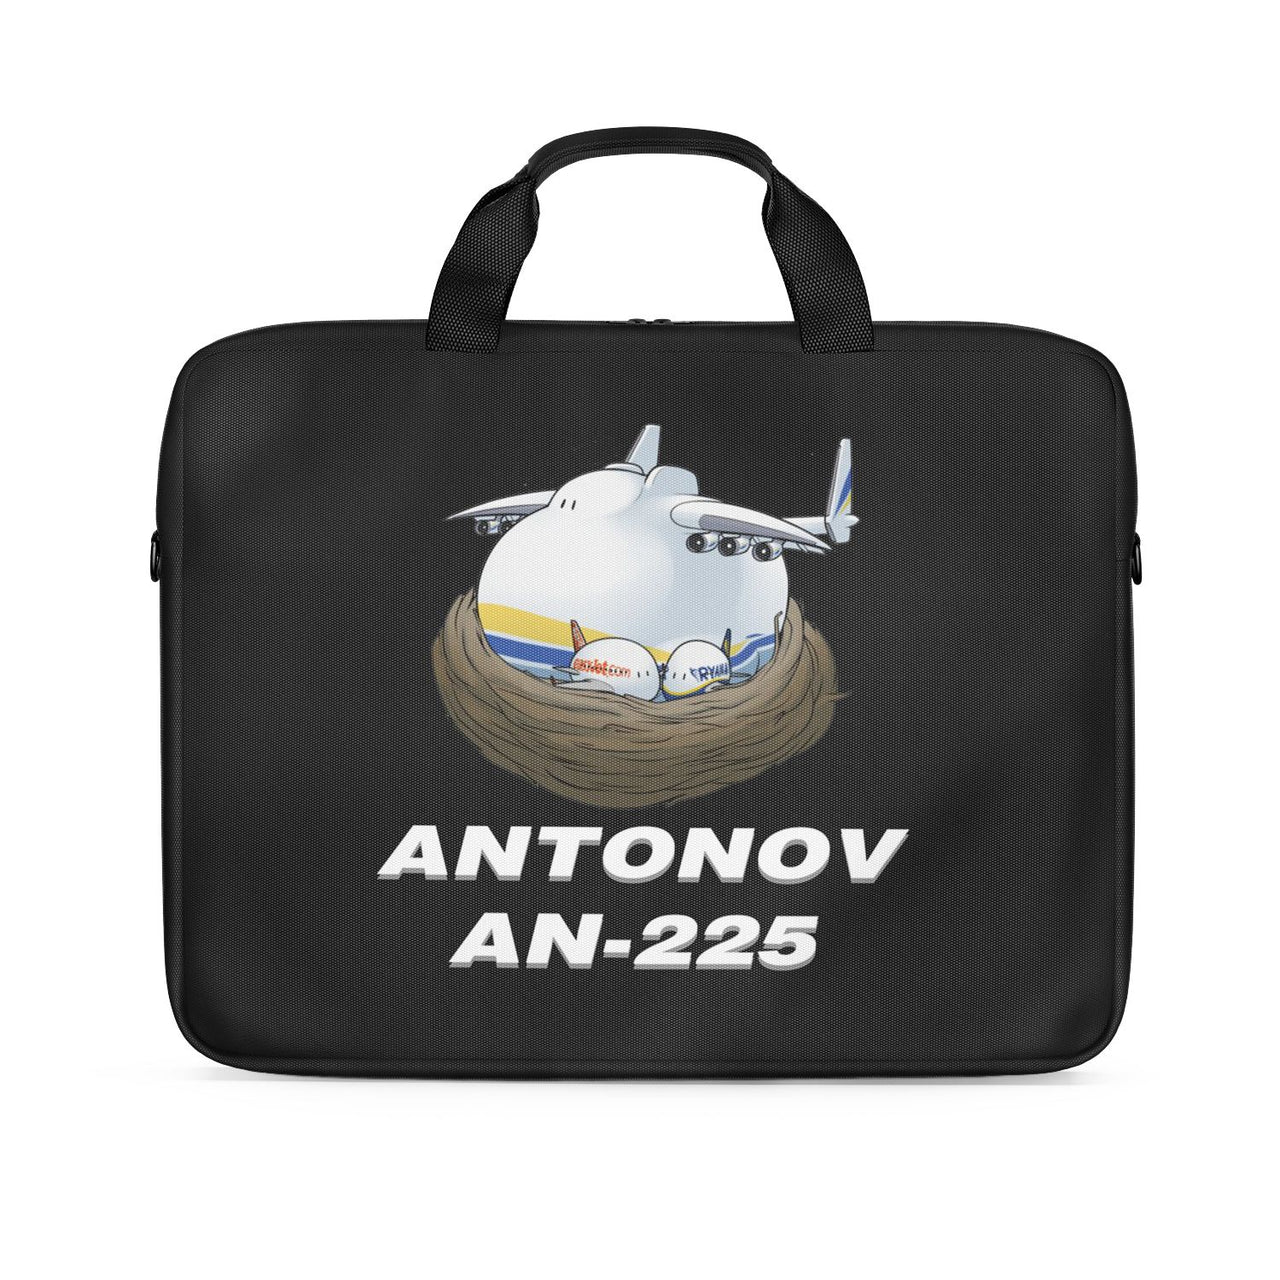 Antonov AN-225 (22) Designed Laptop & Tablet Bags